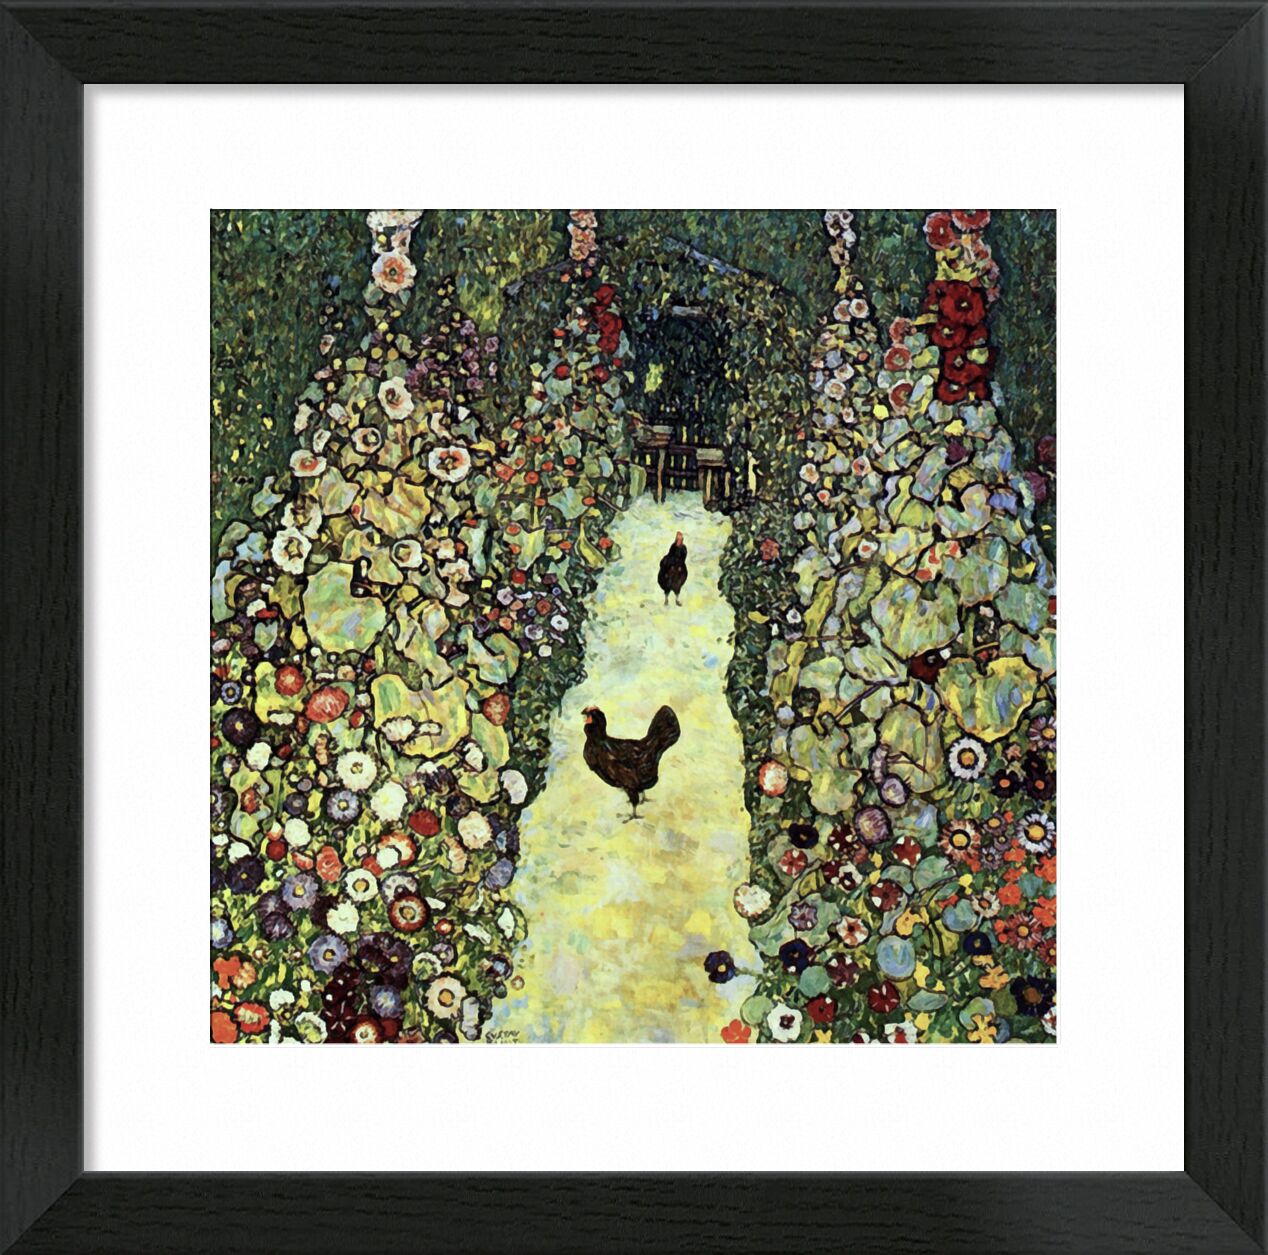 Garden Path with Chickens - Gustav Klimt desde Bellas artes, Prodi Art, KLIMT, naturaleza, granja, campesino, agricultura, pintura, gallina, campo, pollo